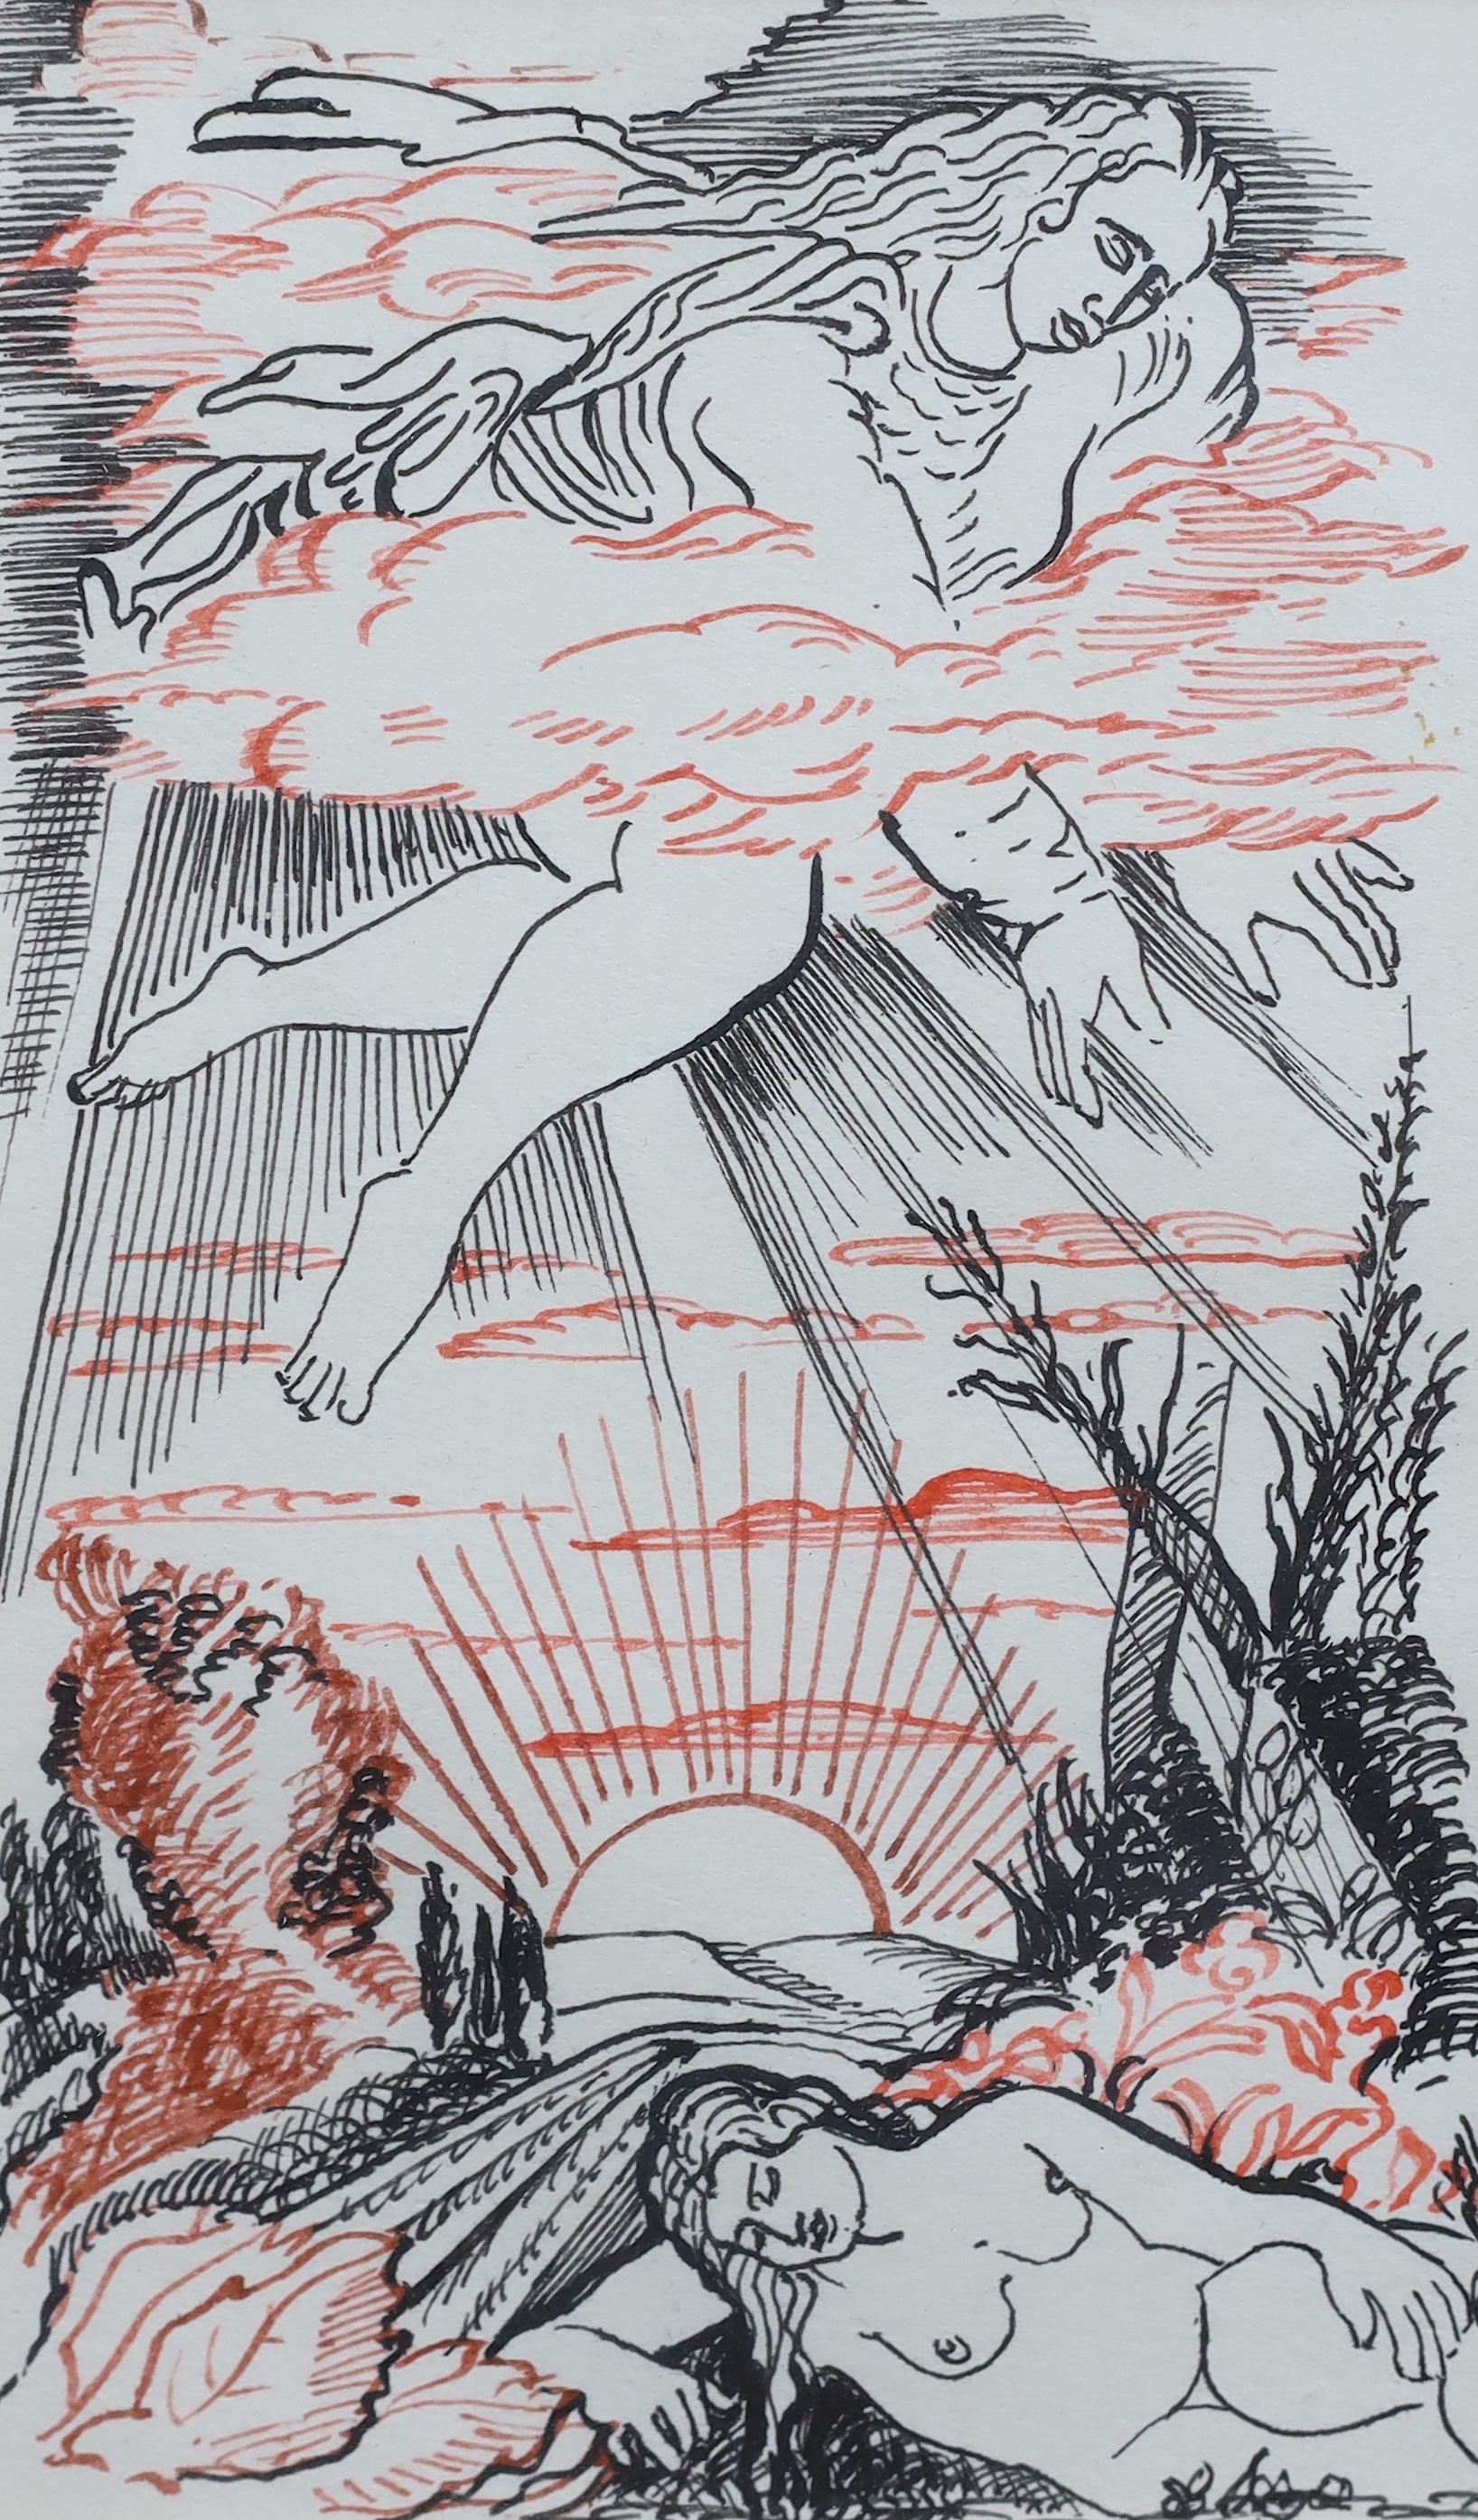 Bernard Meninsky (British, 1891-1950), Illustration for a work by Milton, ink on paper, 16 x 10cm